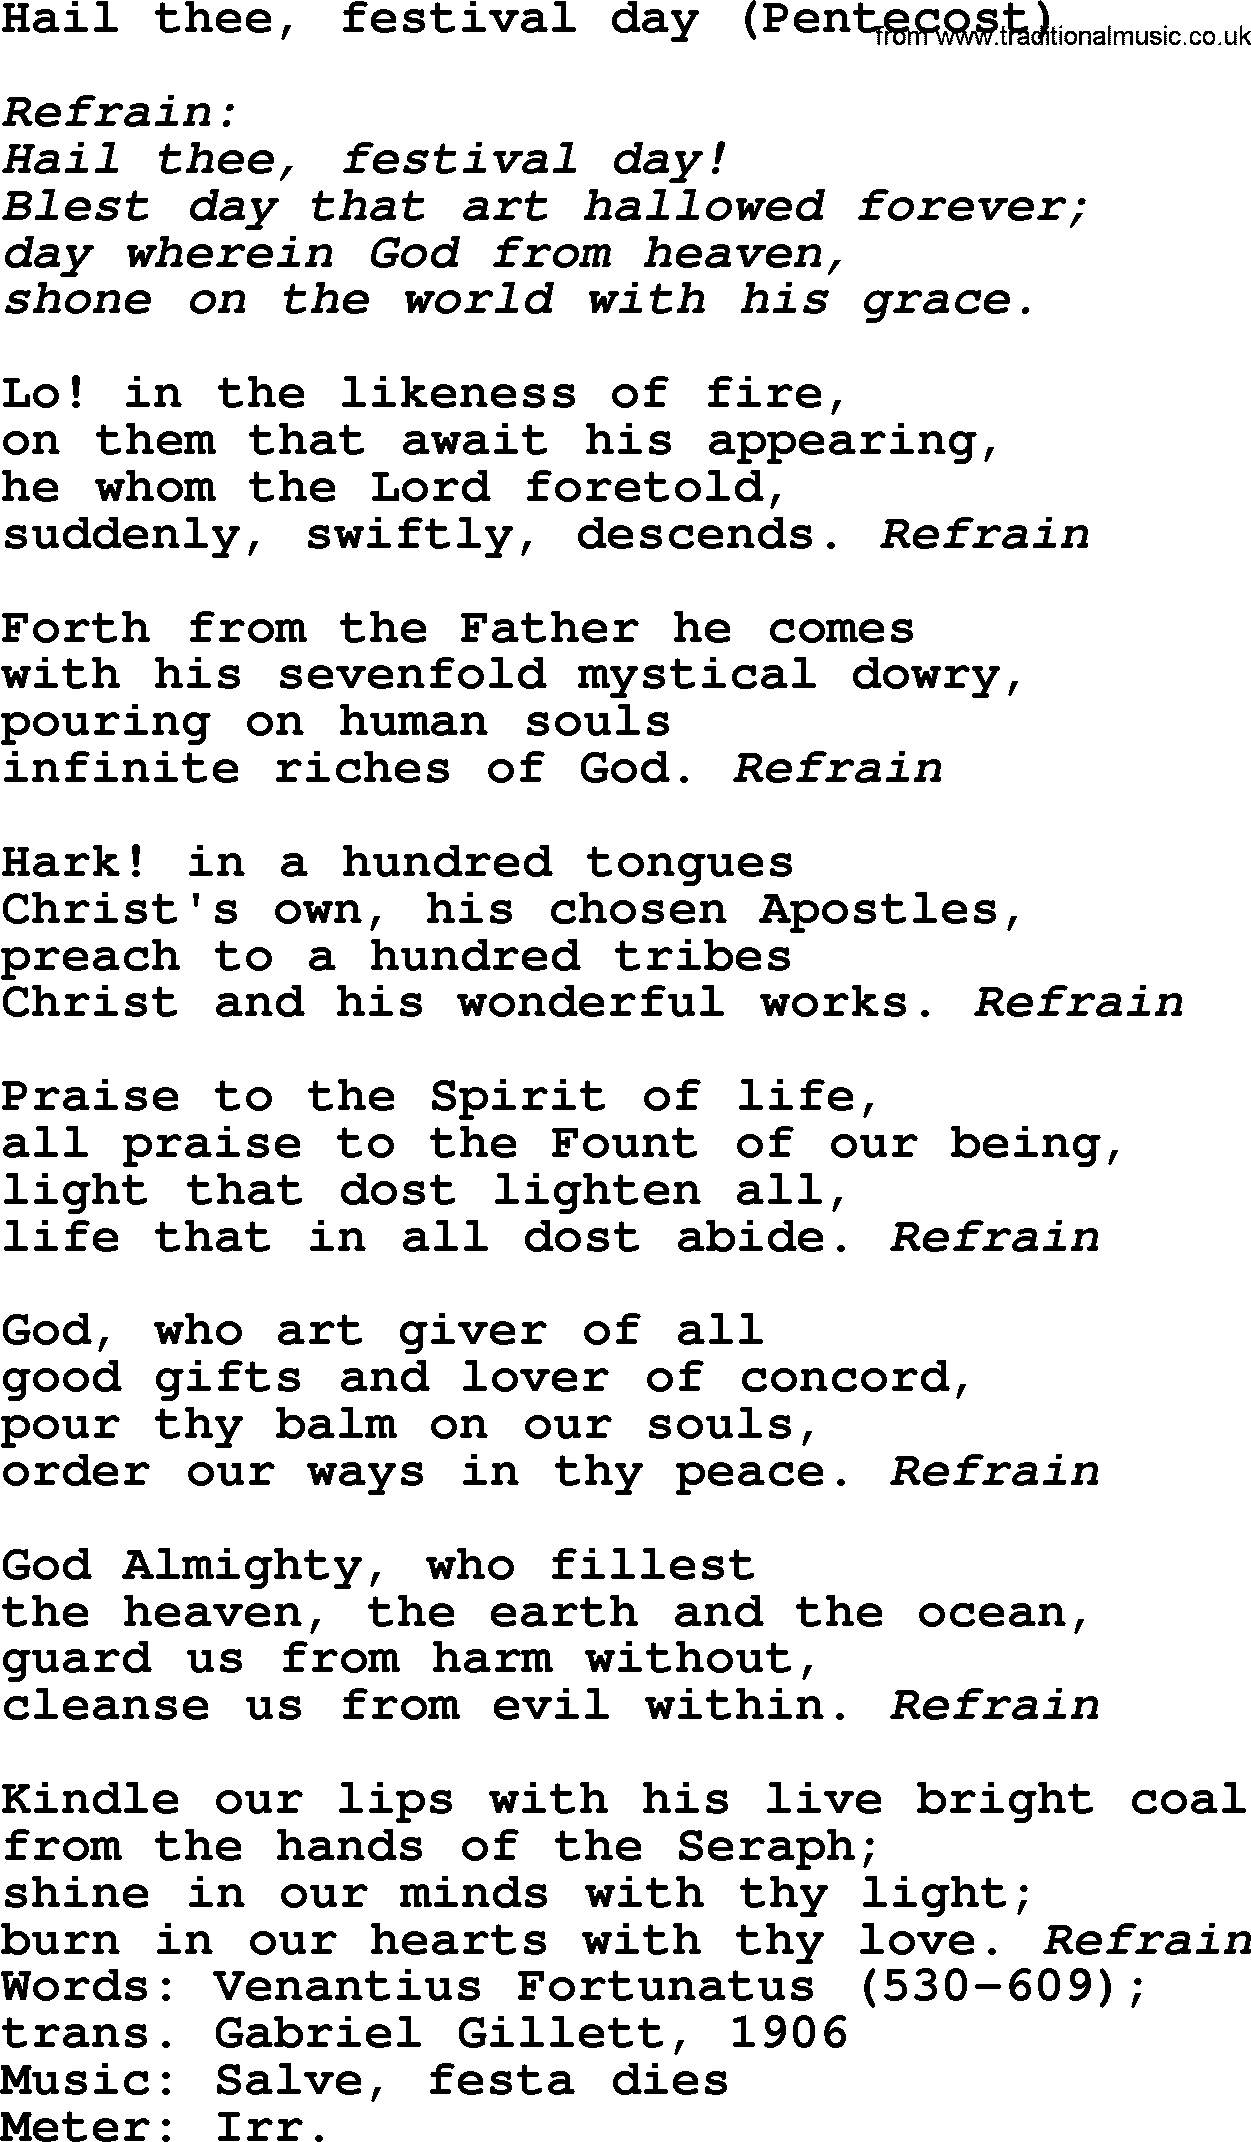 Pentacost Hymns, Hymn: Hail Thee, Festival Day (Pentecost), lyrics with PDF